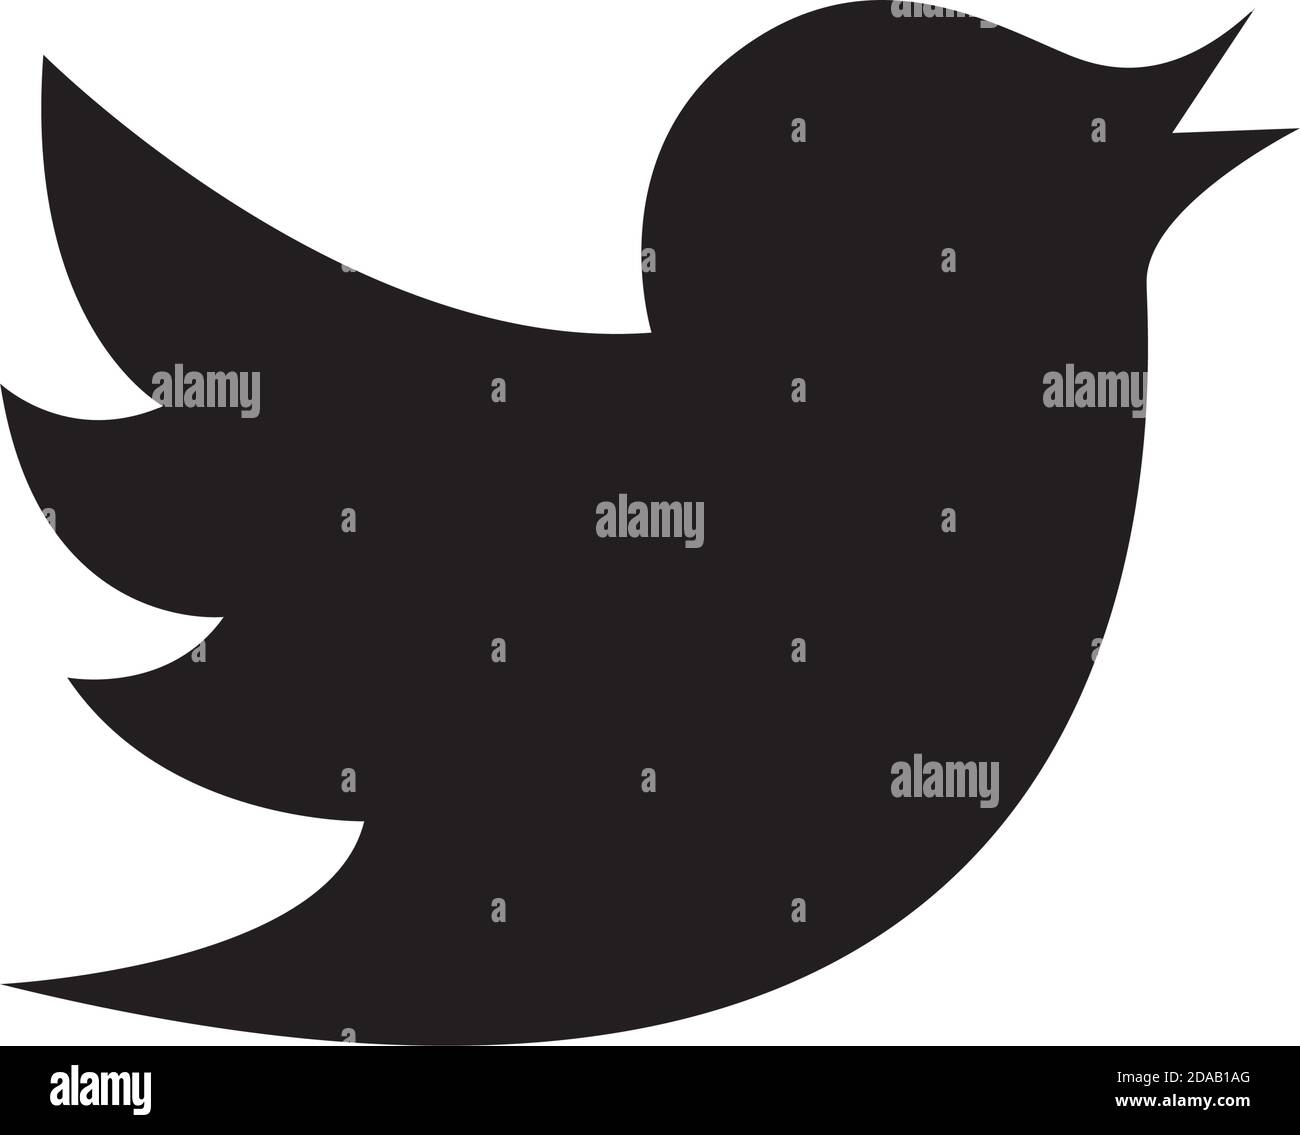 Twitter Social Media Logo Icon Over White Background Silhouette Style